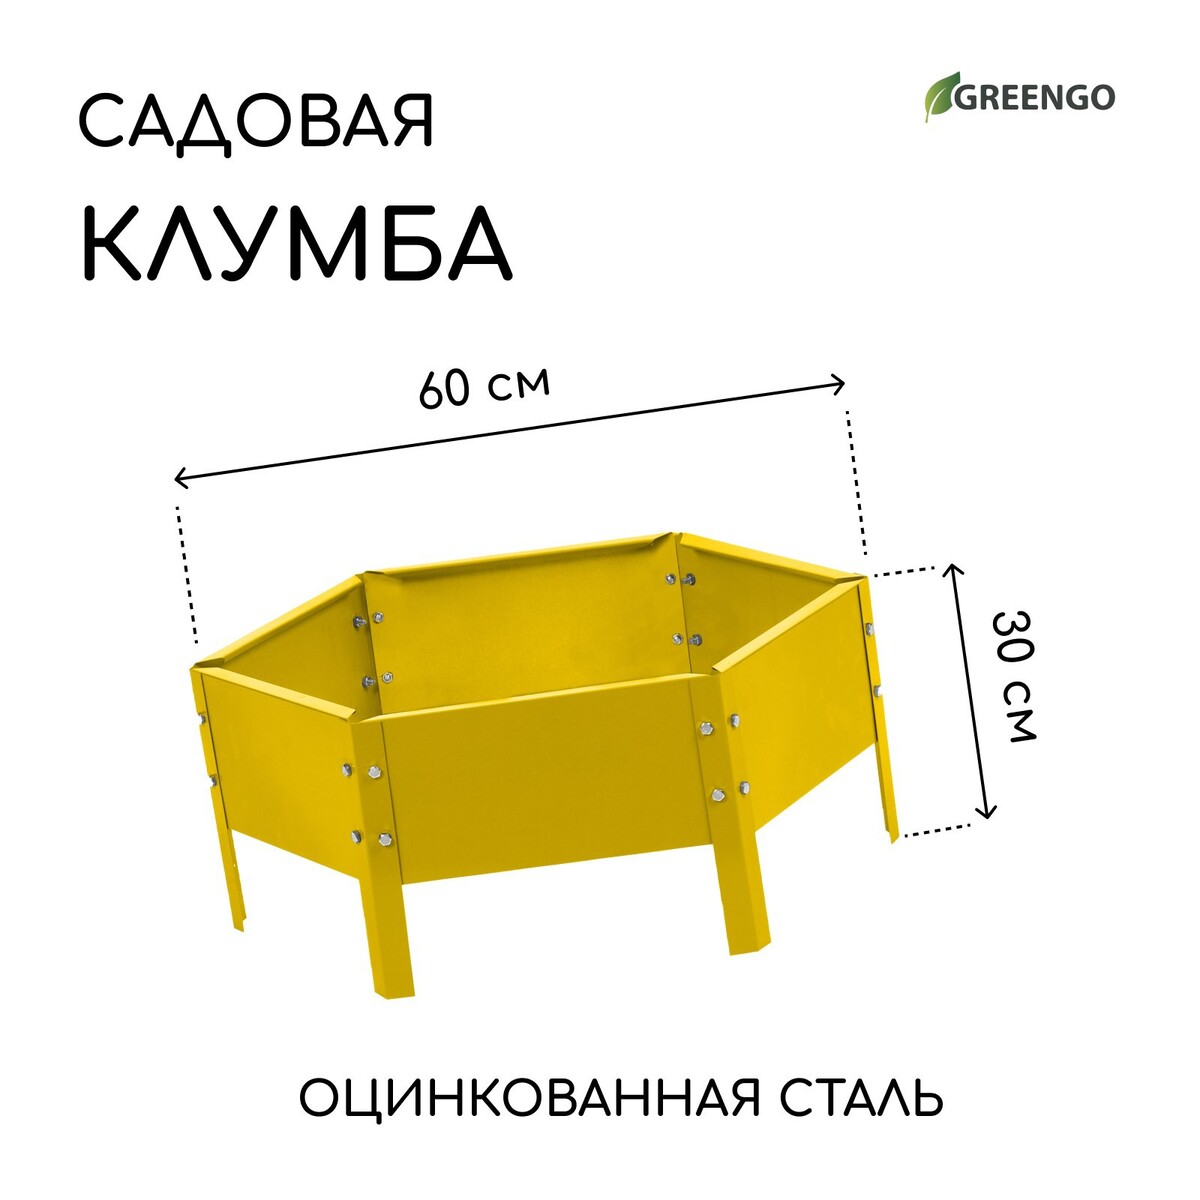 Клумба оцинкованная, d = 60 см, h = 15 см, желтая, greengo din рейка l 225 оцинкованная желтый